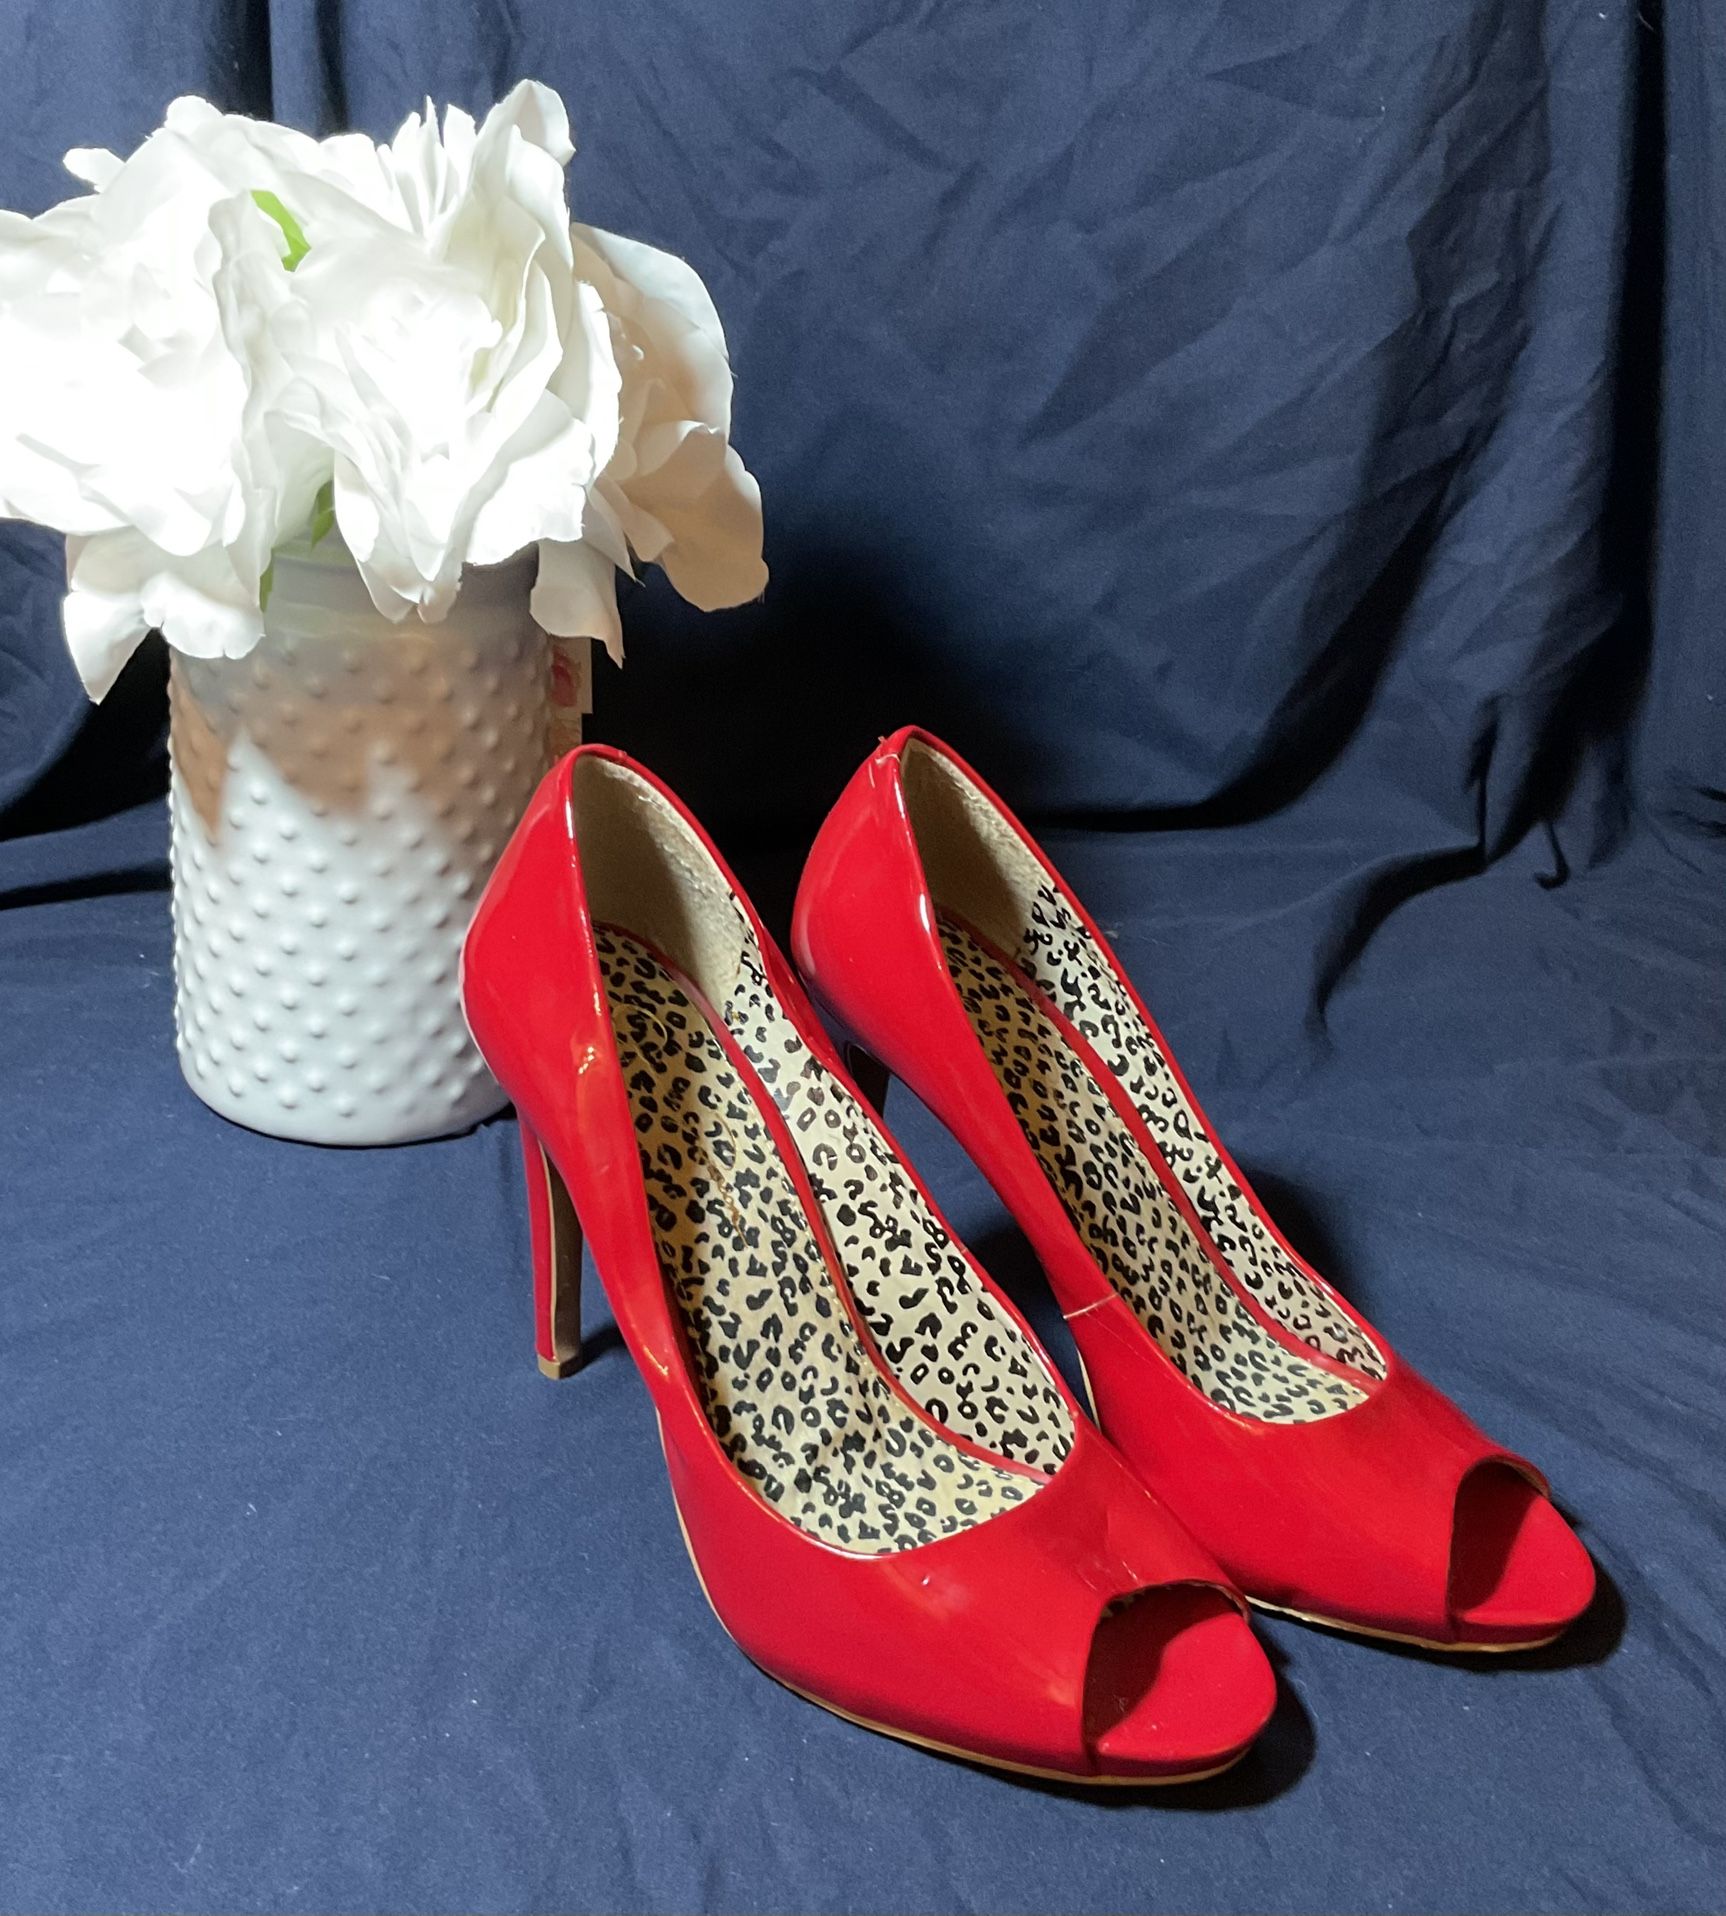 Jessica Simpson Red Patent Leather Peep Toe High Heels